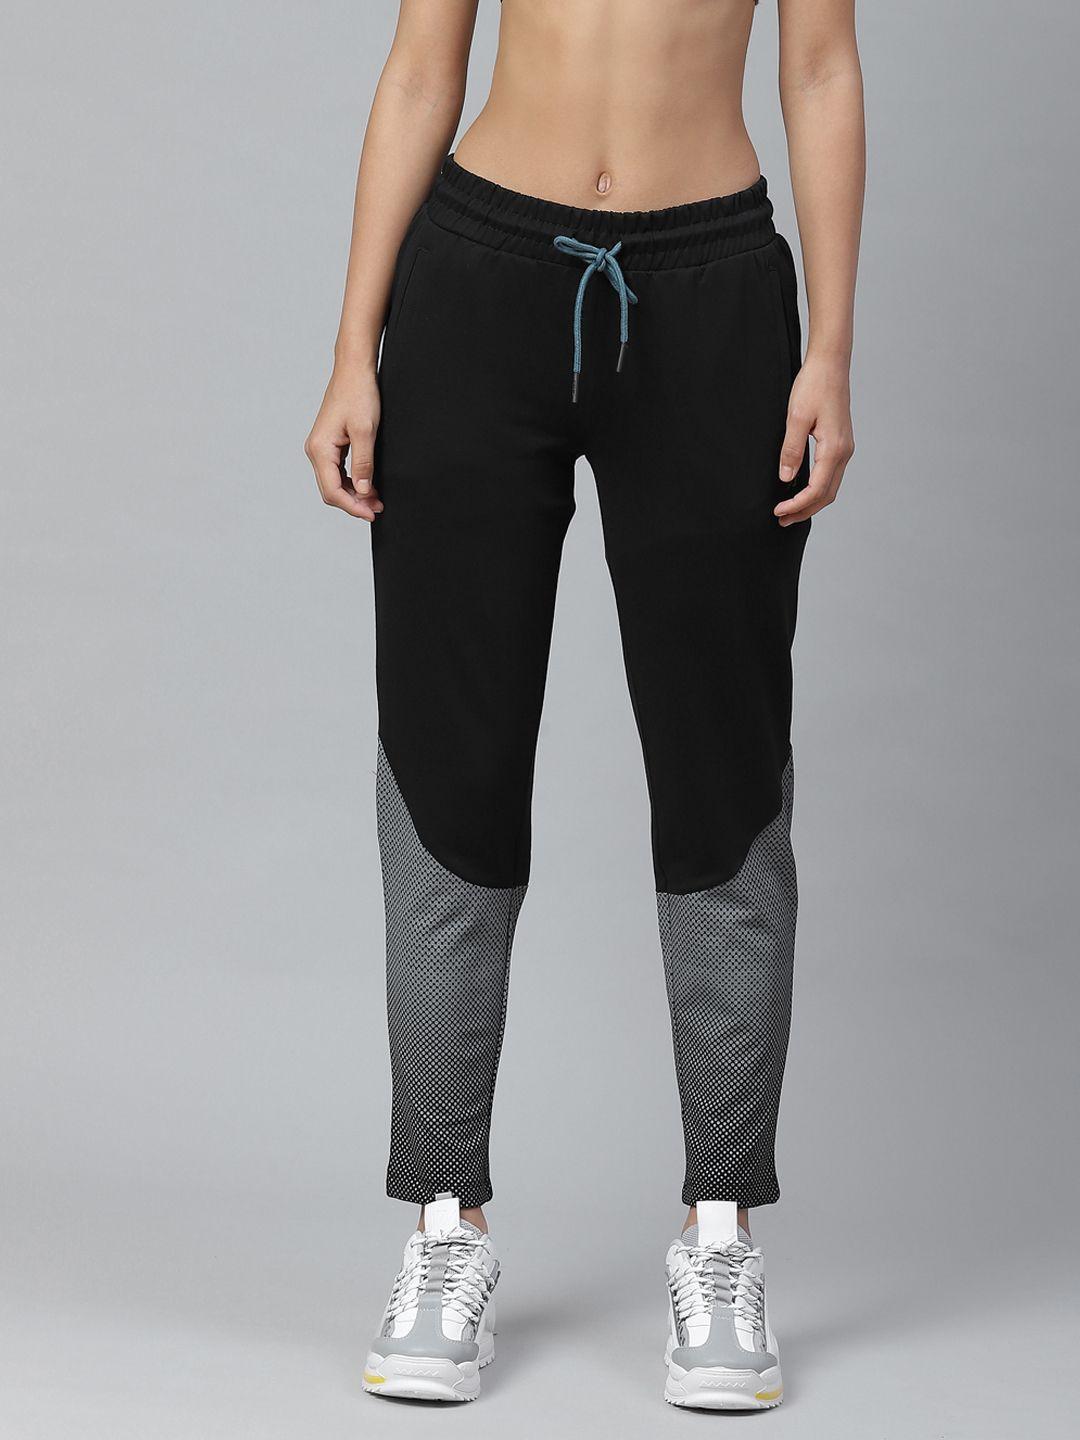 alcis women black & grey geometric print slim fit track pants